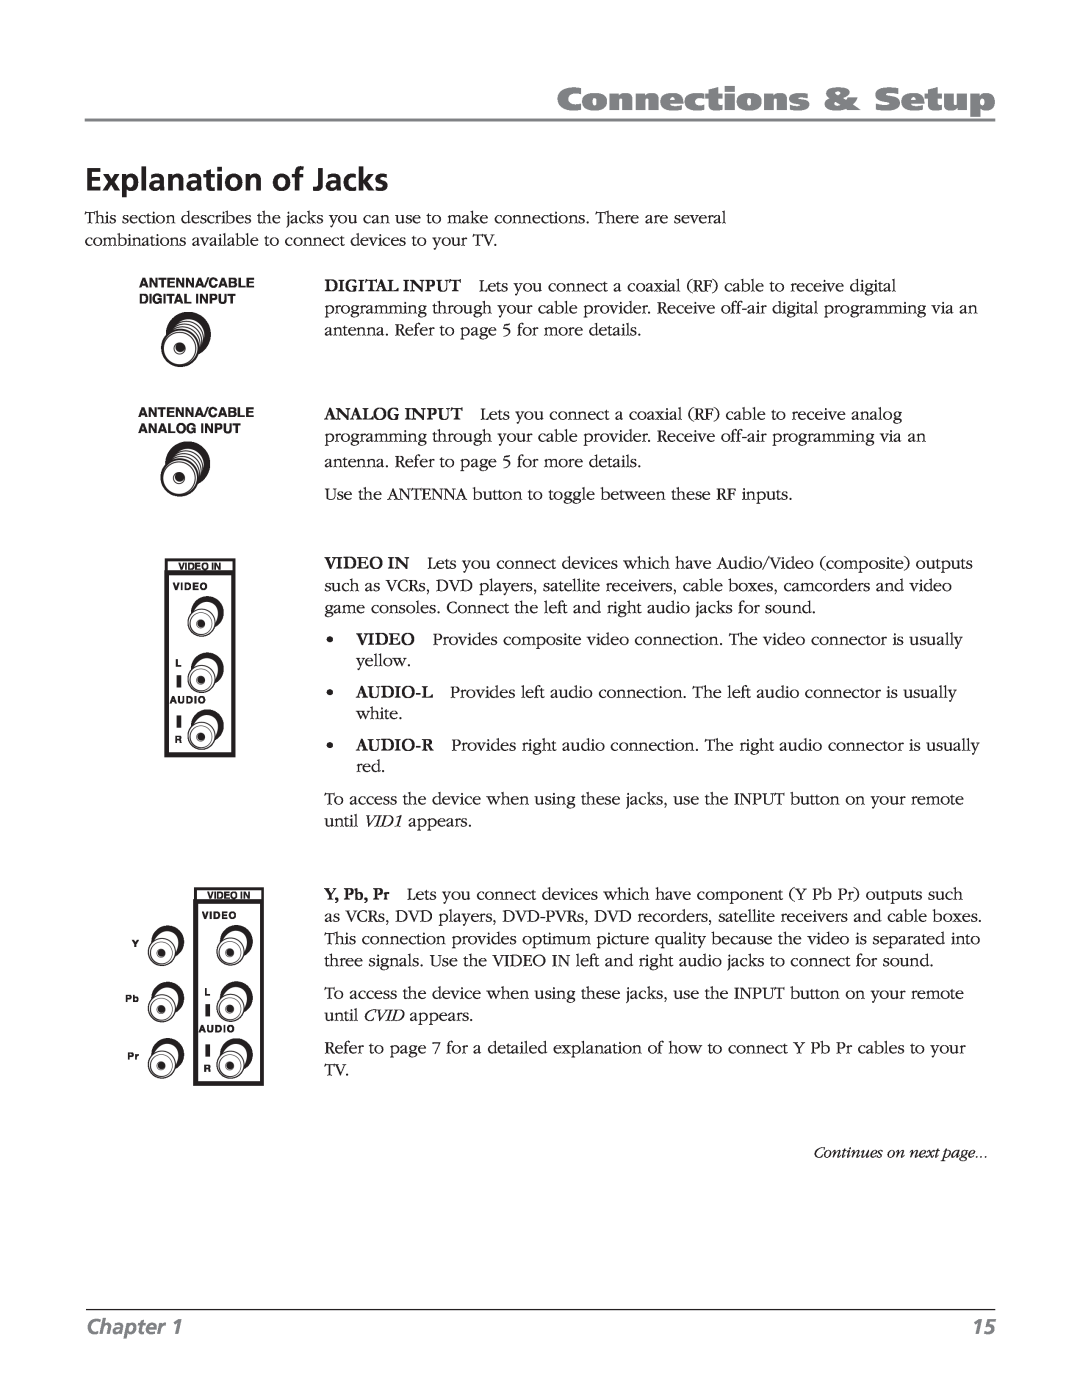 RCA 32v434t, 32V524T manual Explanation of Jacks, Connections & Setup, Chapter 